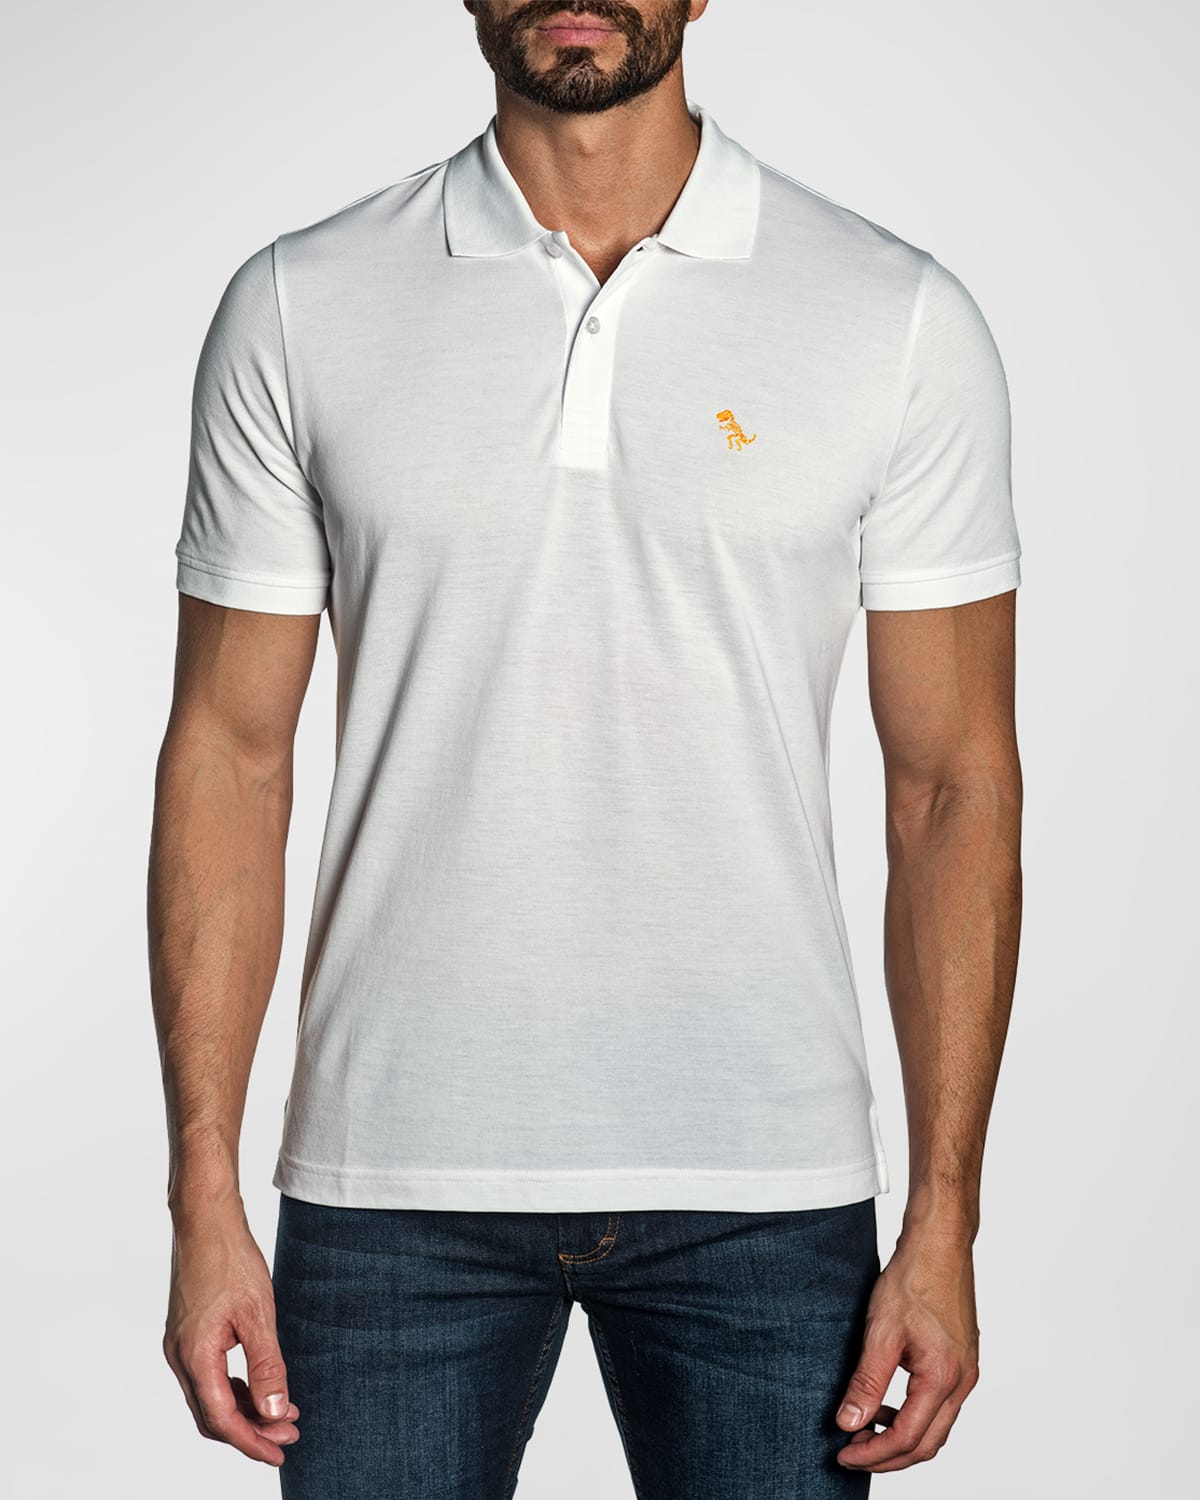 Men's White Pima Cotton Knitted T-Shirt